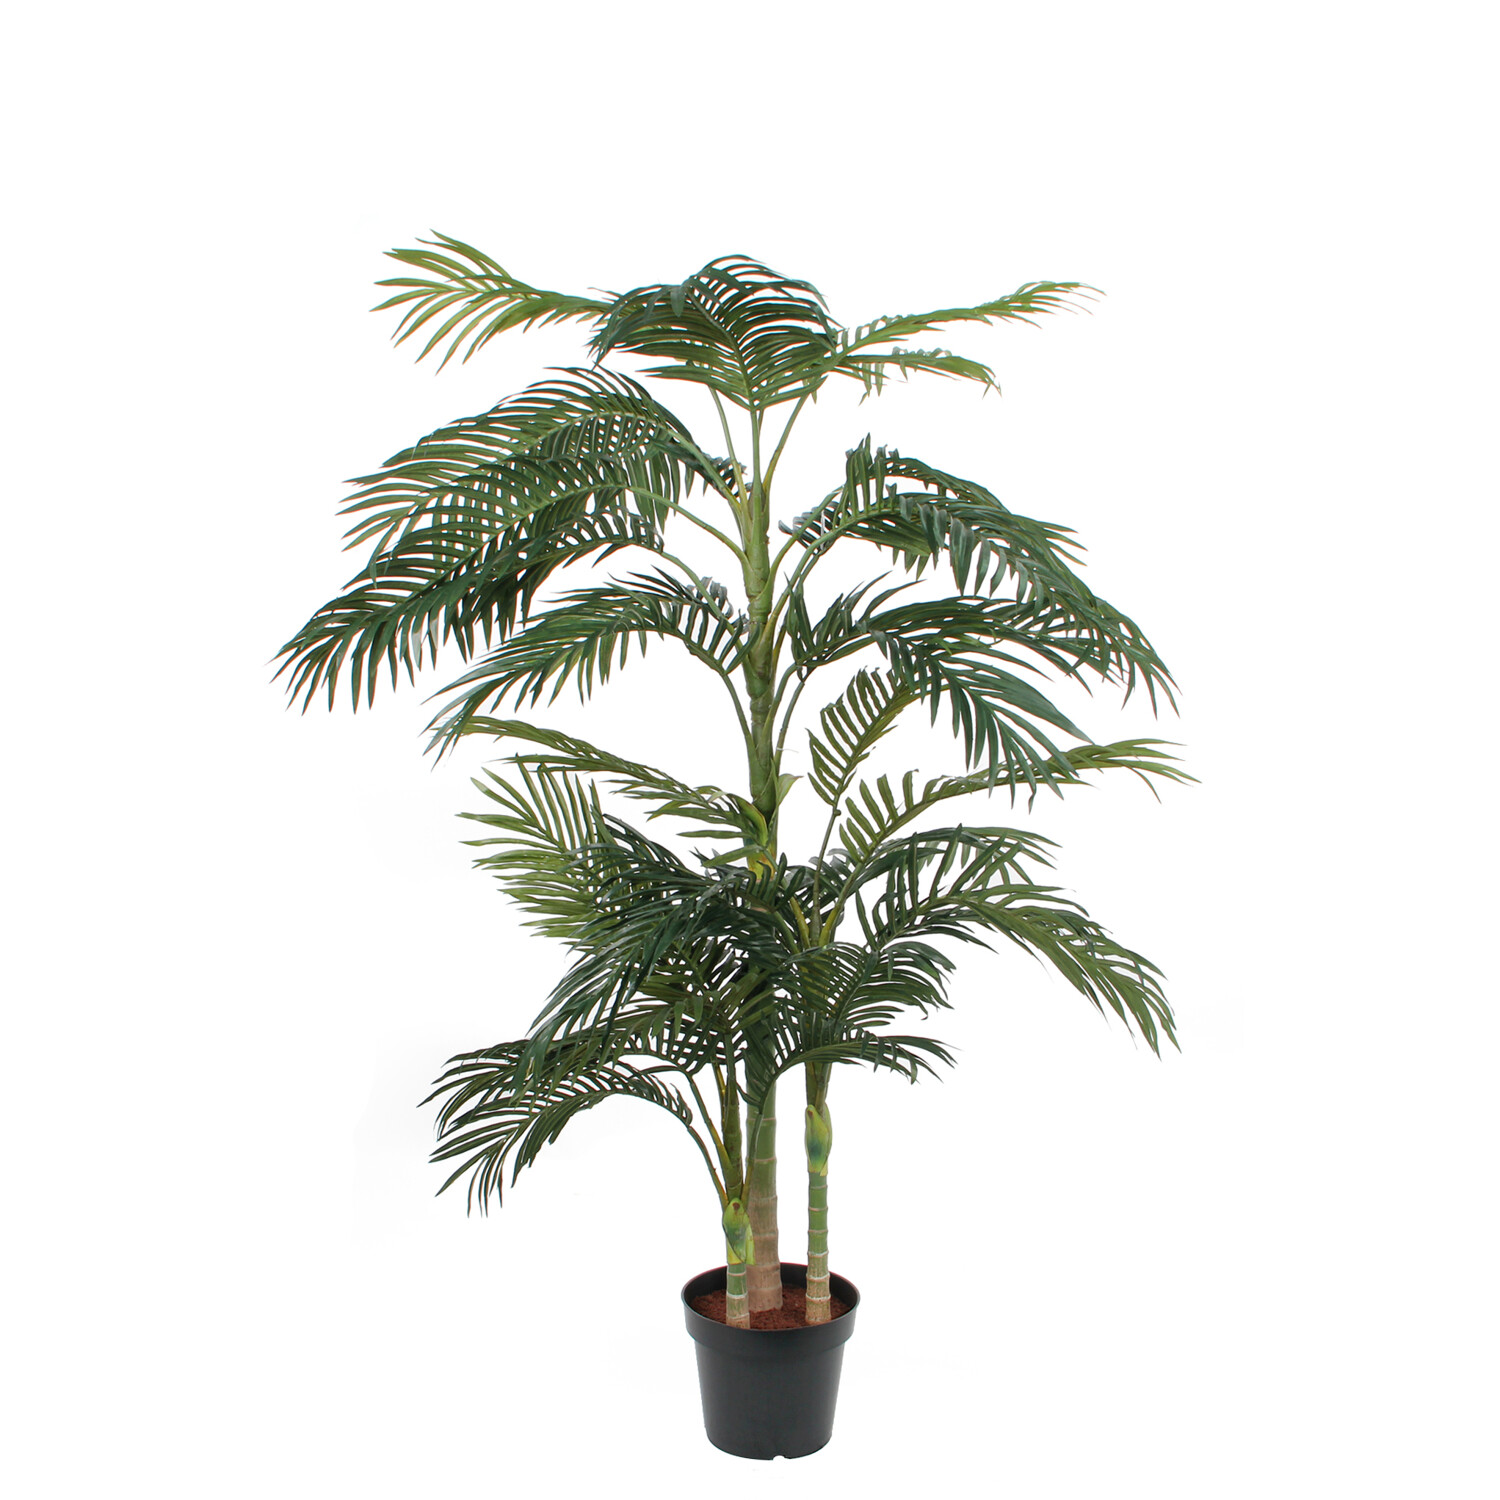 Afbeelding Areca Palm h190 d145 cm groen in plastic pot Mica Decorations Edelman - E-Retail door Tuinadvies.be